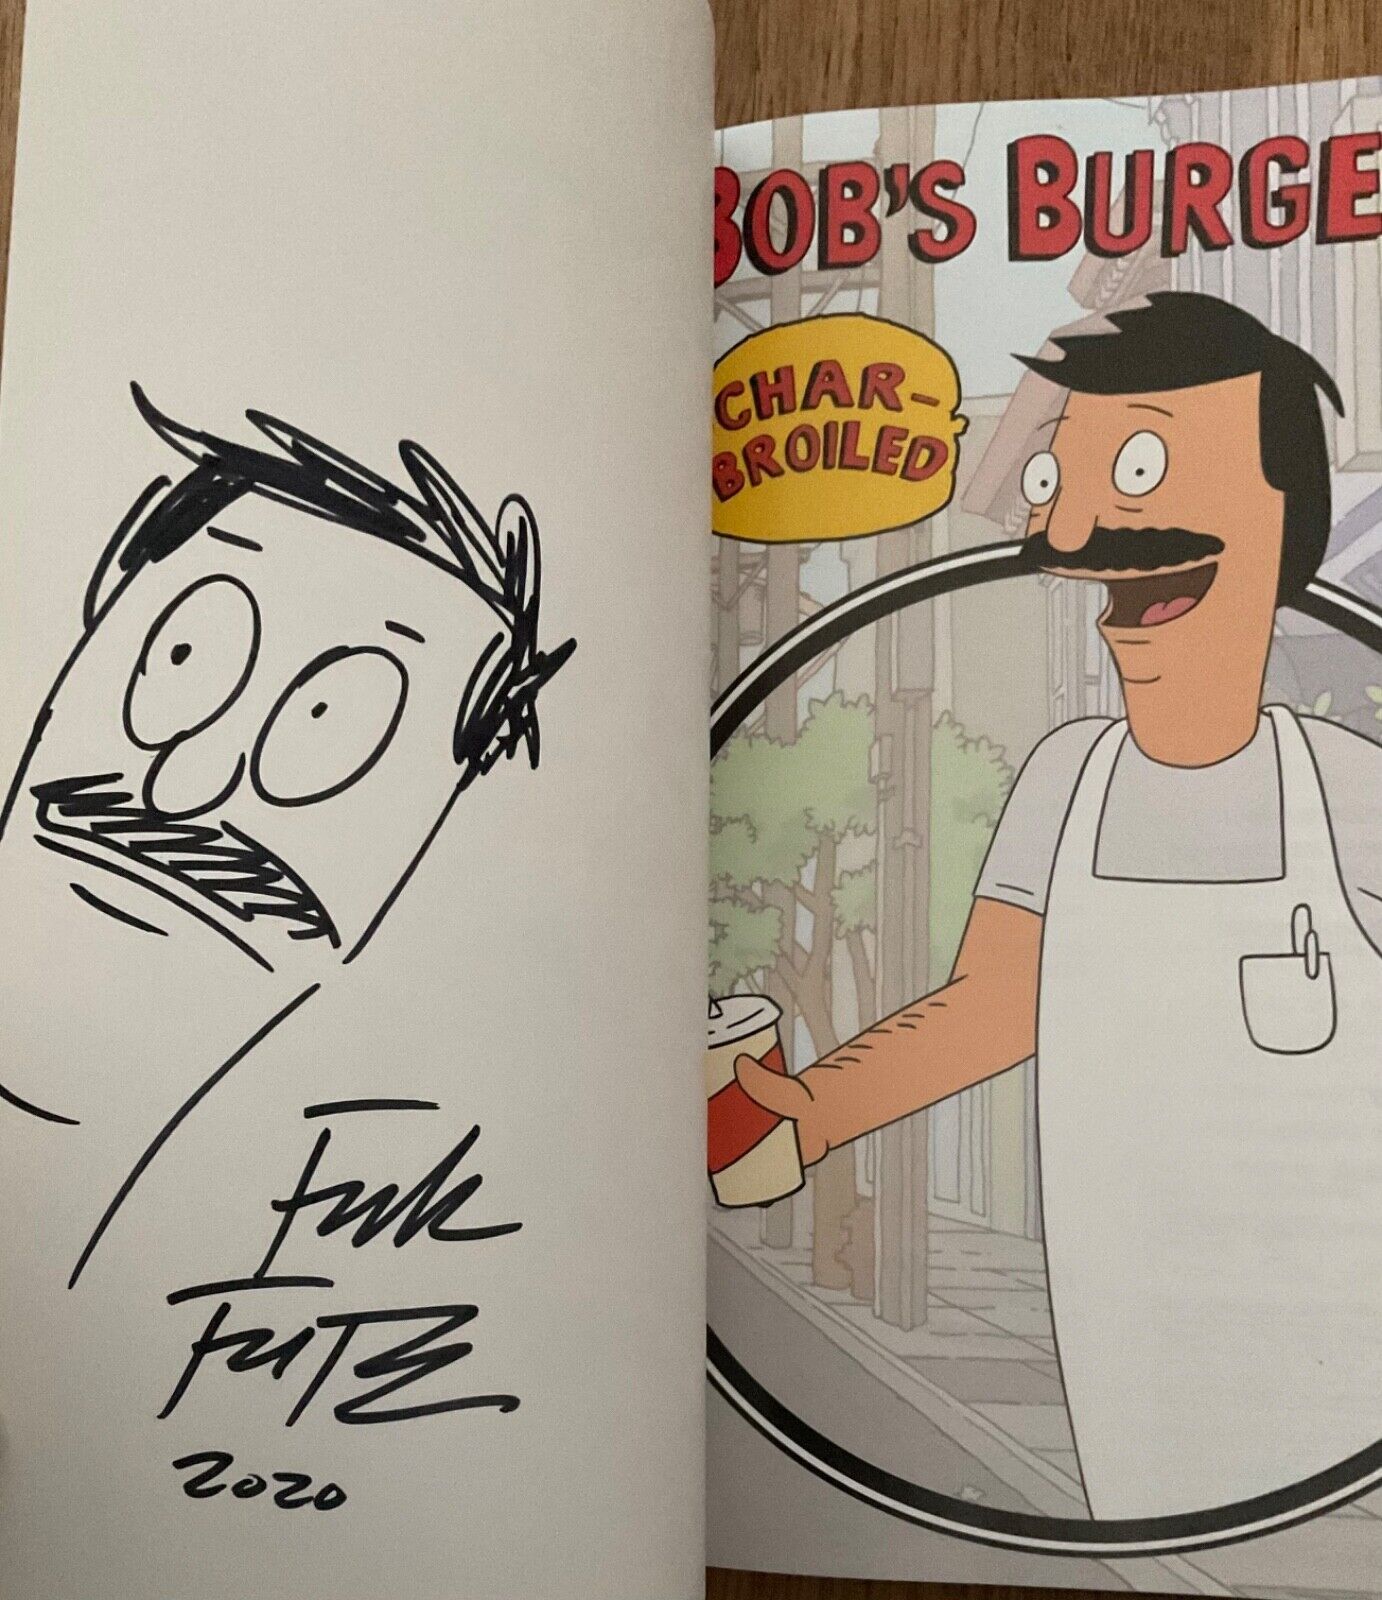 Bob's Burgers Char-Broiled Signed Frank Forte with Bob Belcher Sketch